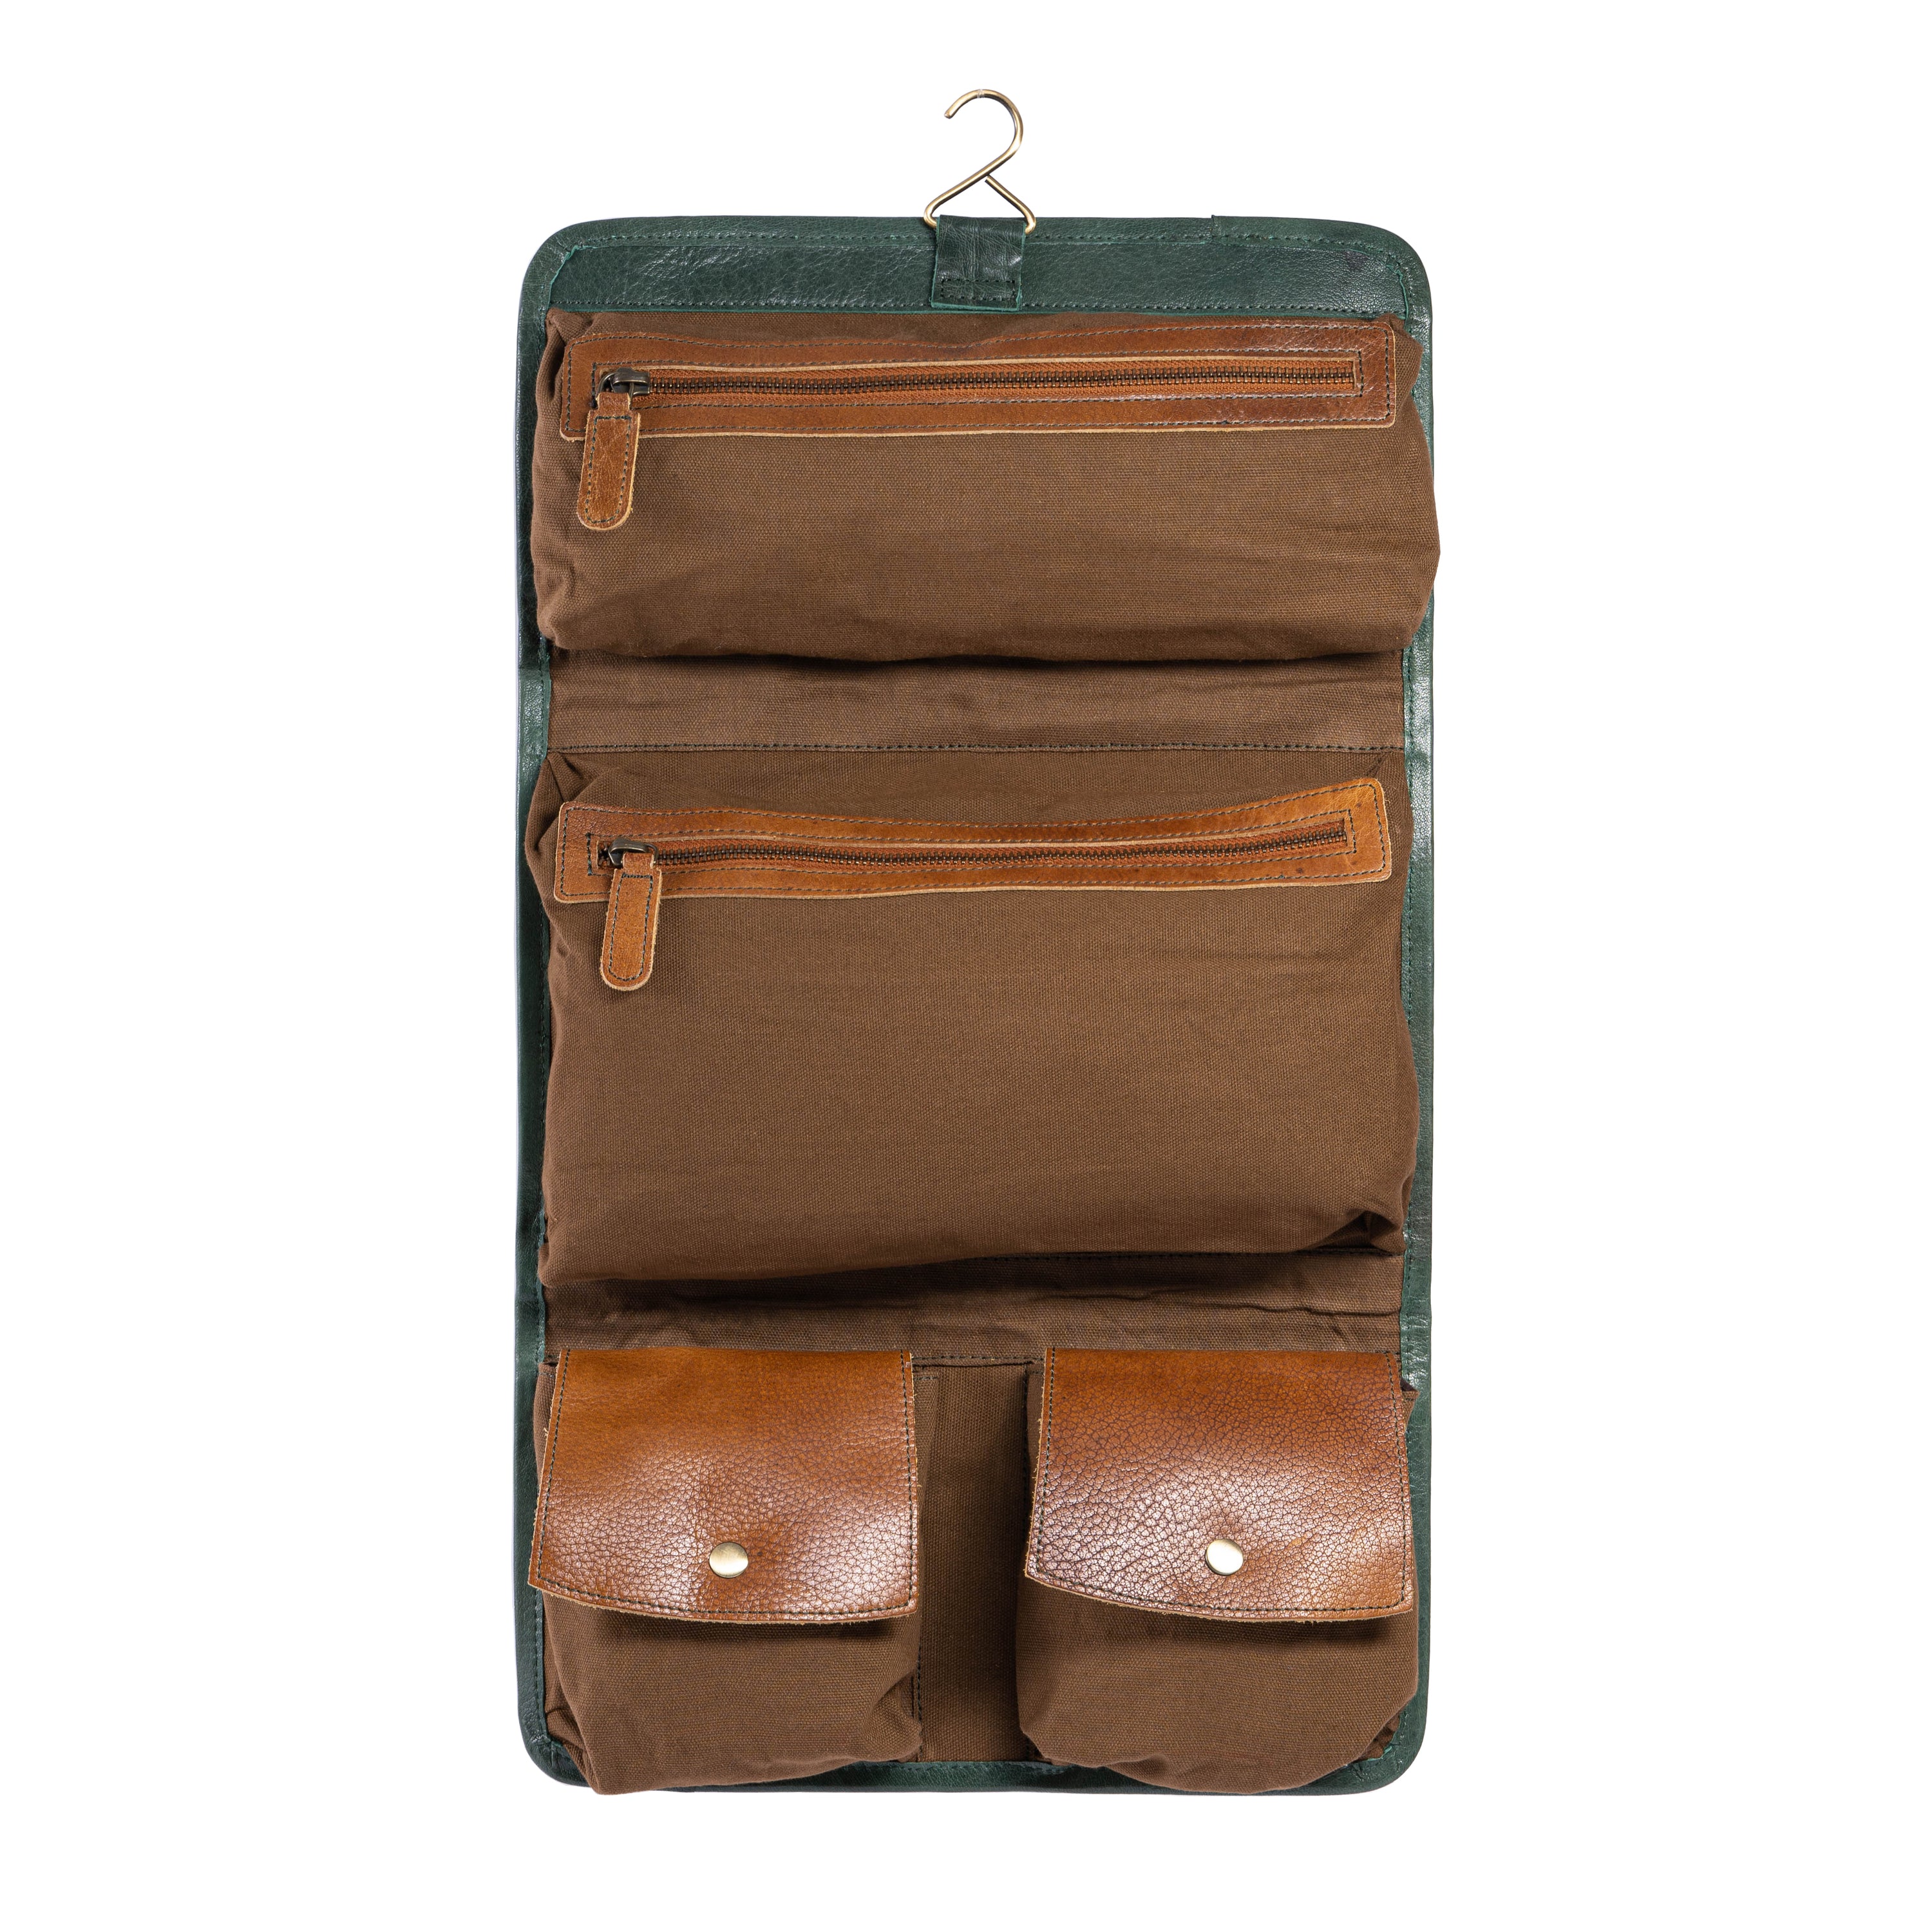 Limited Edition Roosevelt Buffalo Leather Toiletry Kit | Buffalo Grain